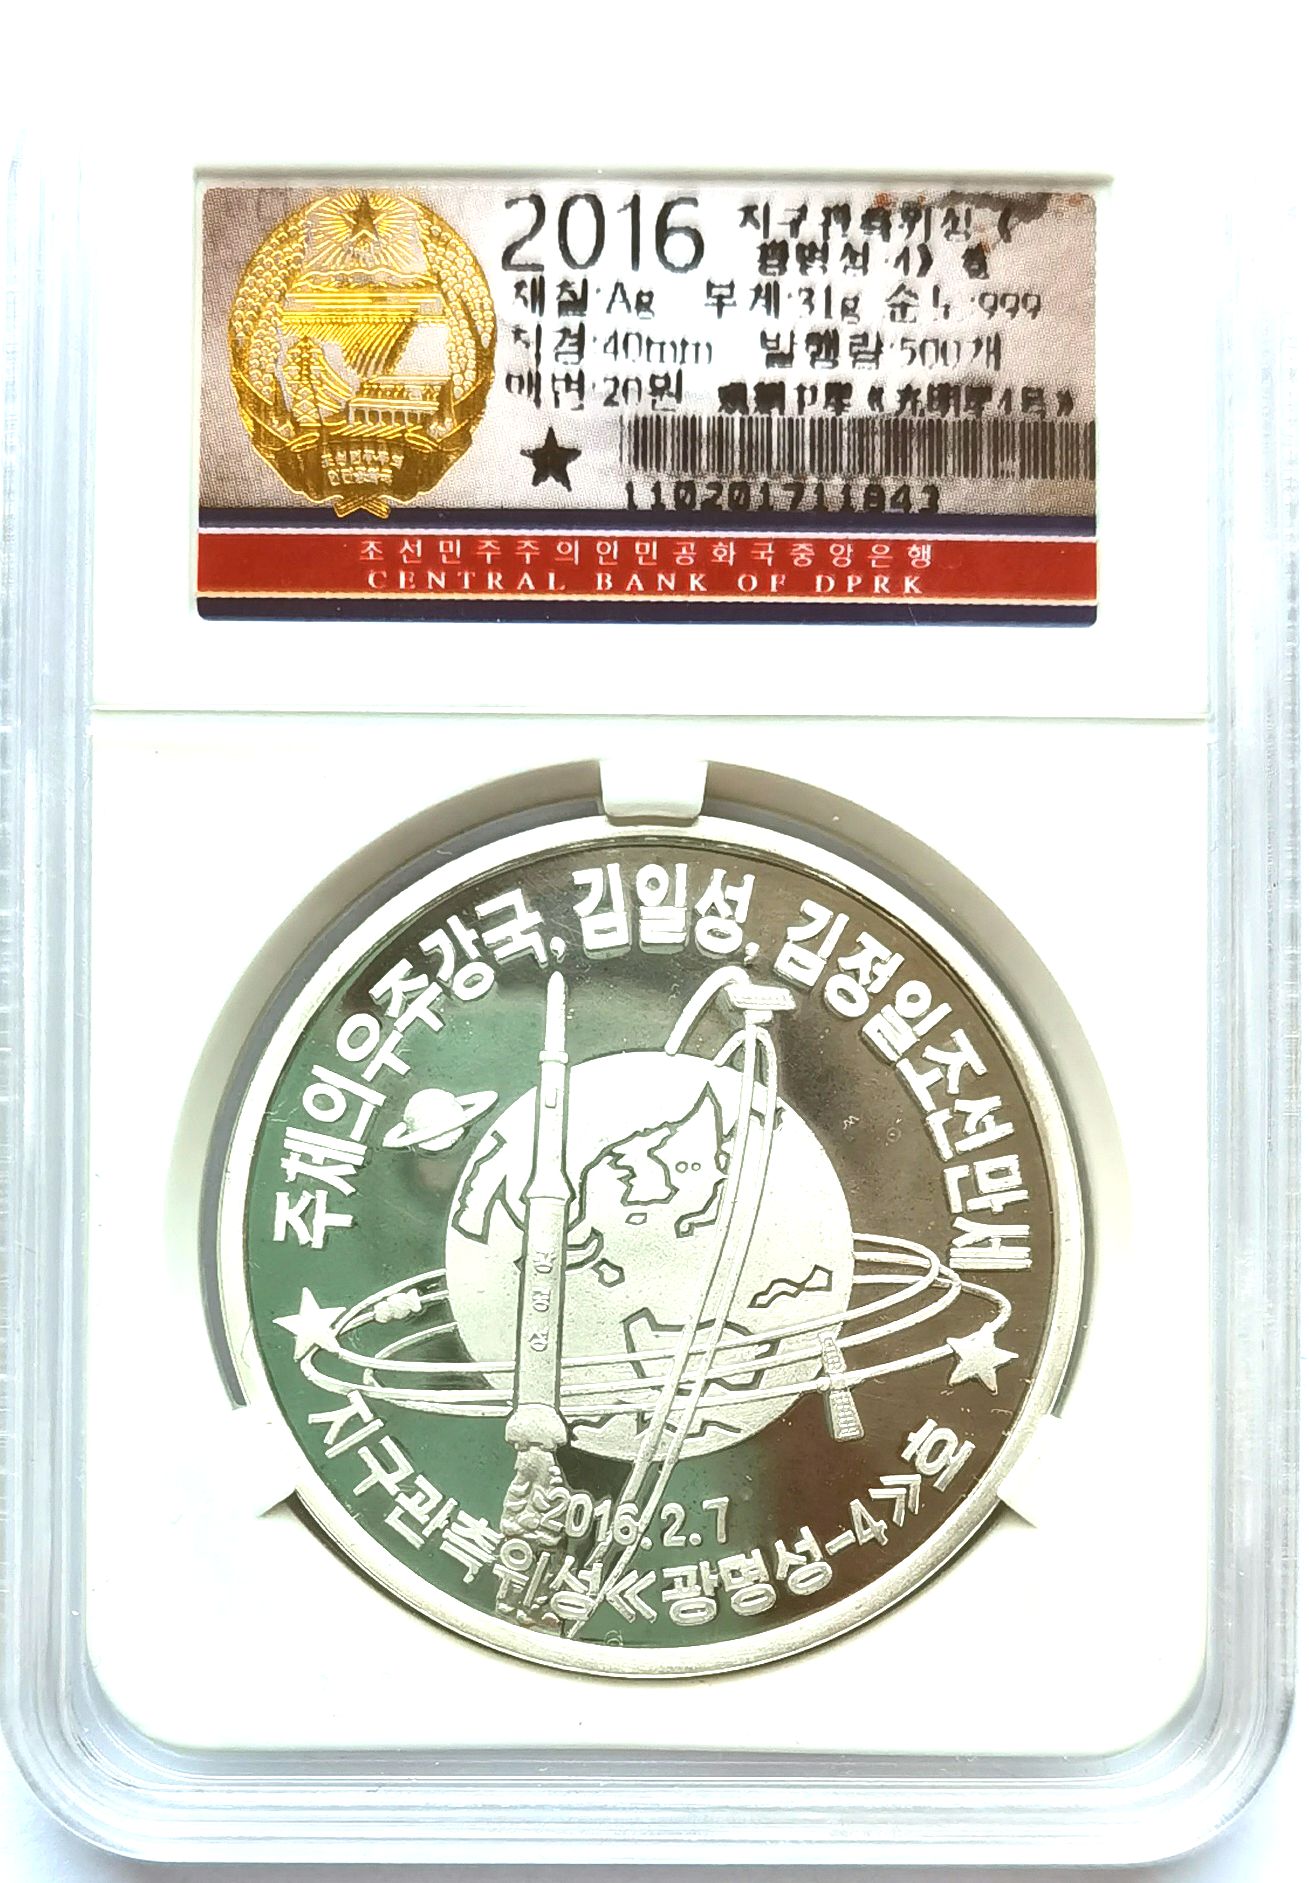 L3456, Korea "Kwangmyongsong-4 Missile Rocket" Silver Coin 1 oz. 2016, PCGS PR68 DCAM